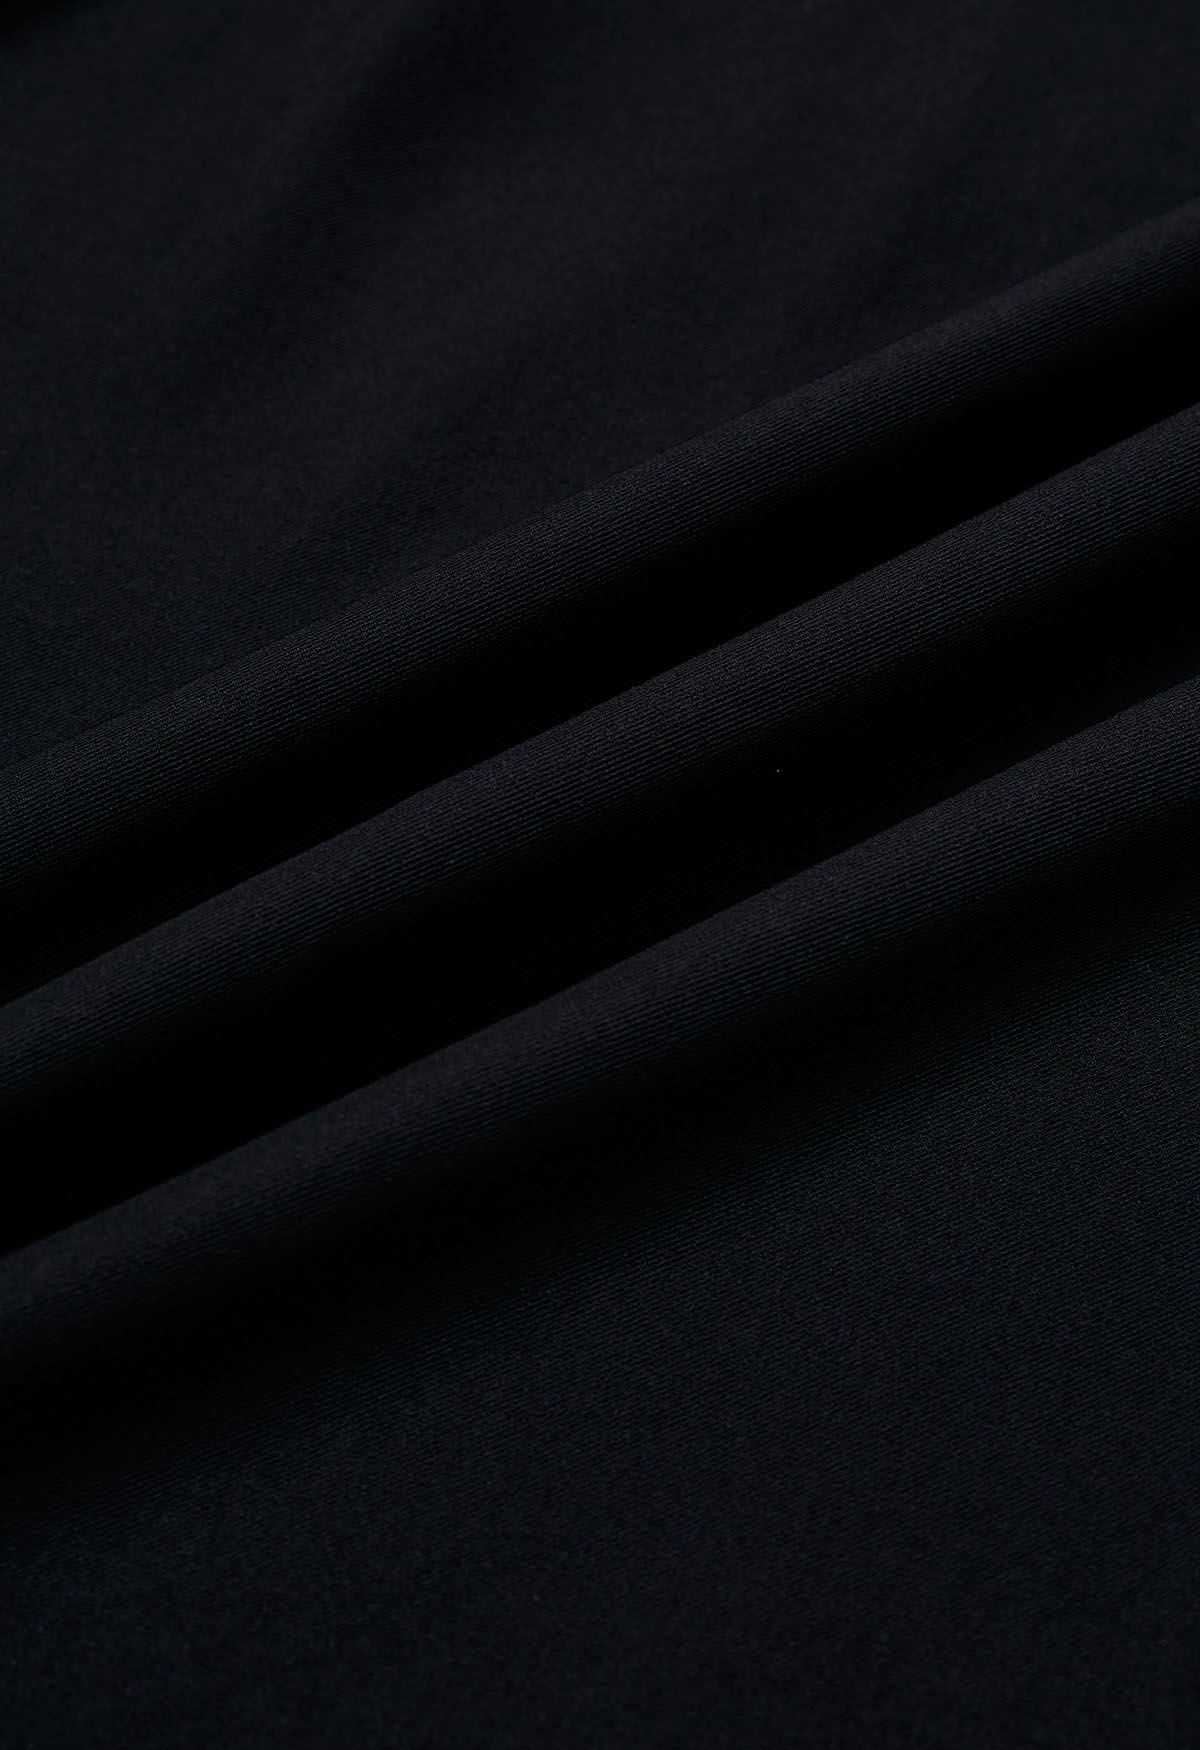 Belt Embellished High Waist Pleated Midi Skirt in Black